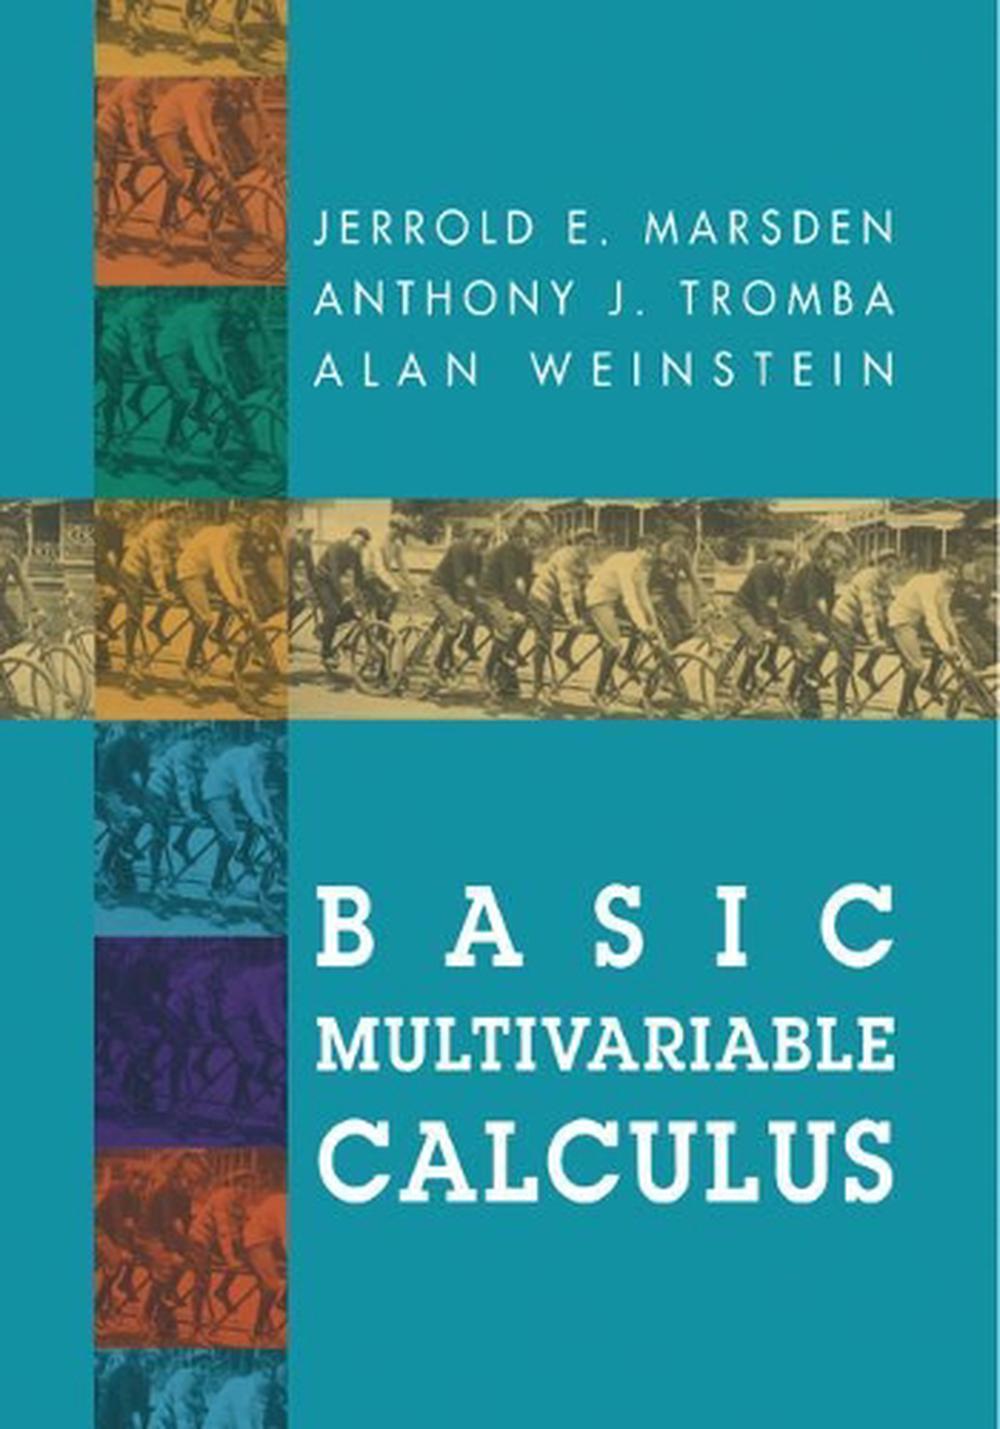 Basic Multivariable Calculus by Jerrold E. Marsden (English) Hardcover